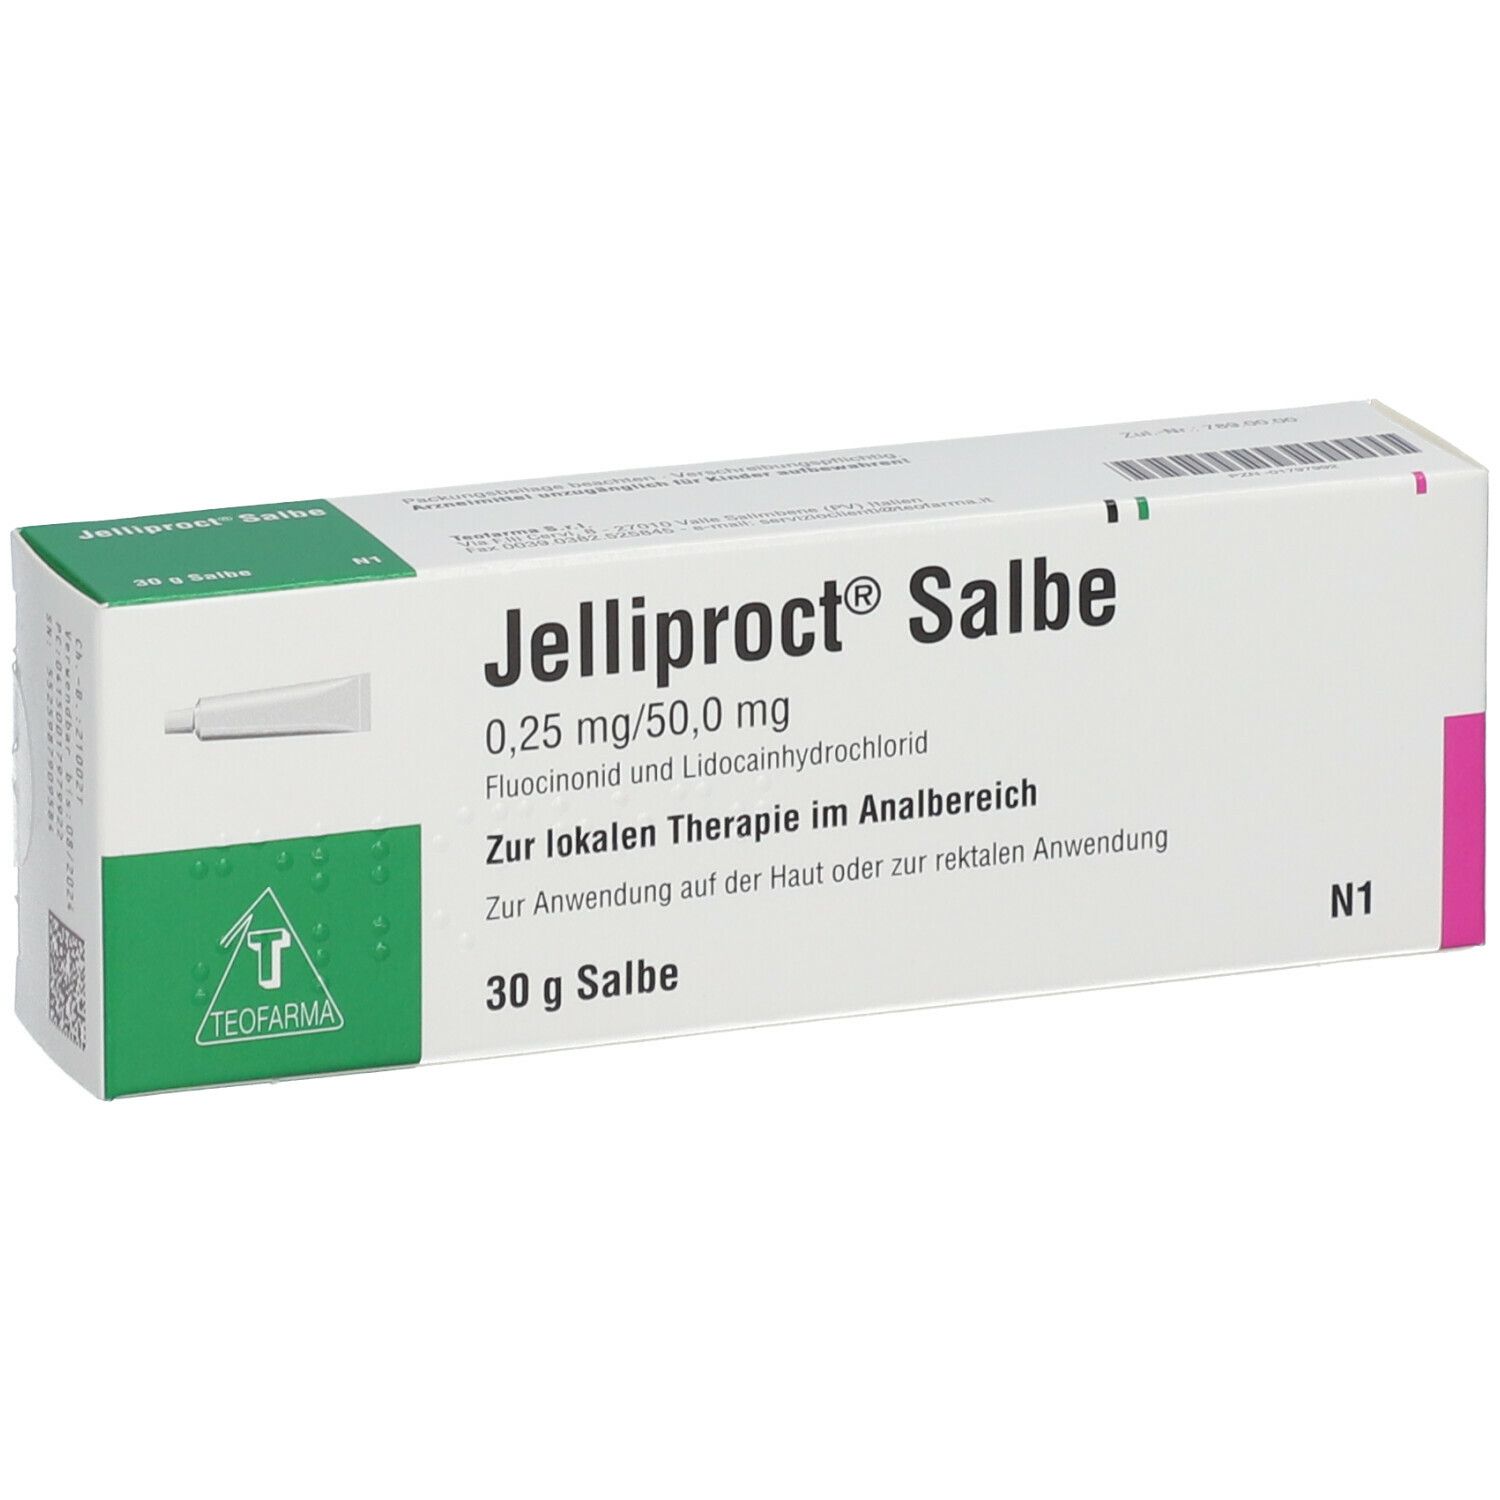 Jelliproct® Salbe 0,25 mg/50,0 mg